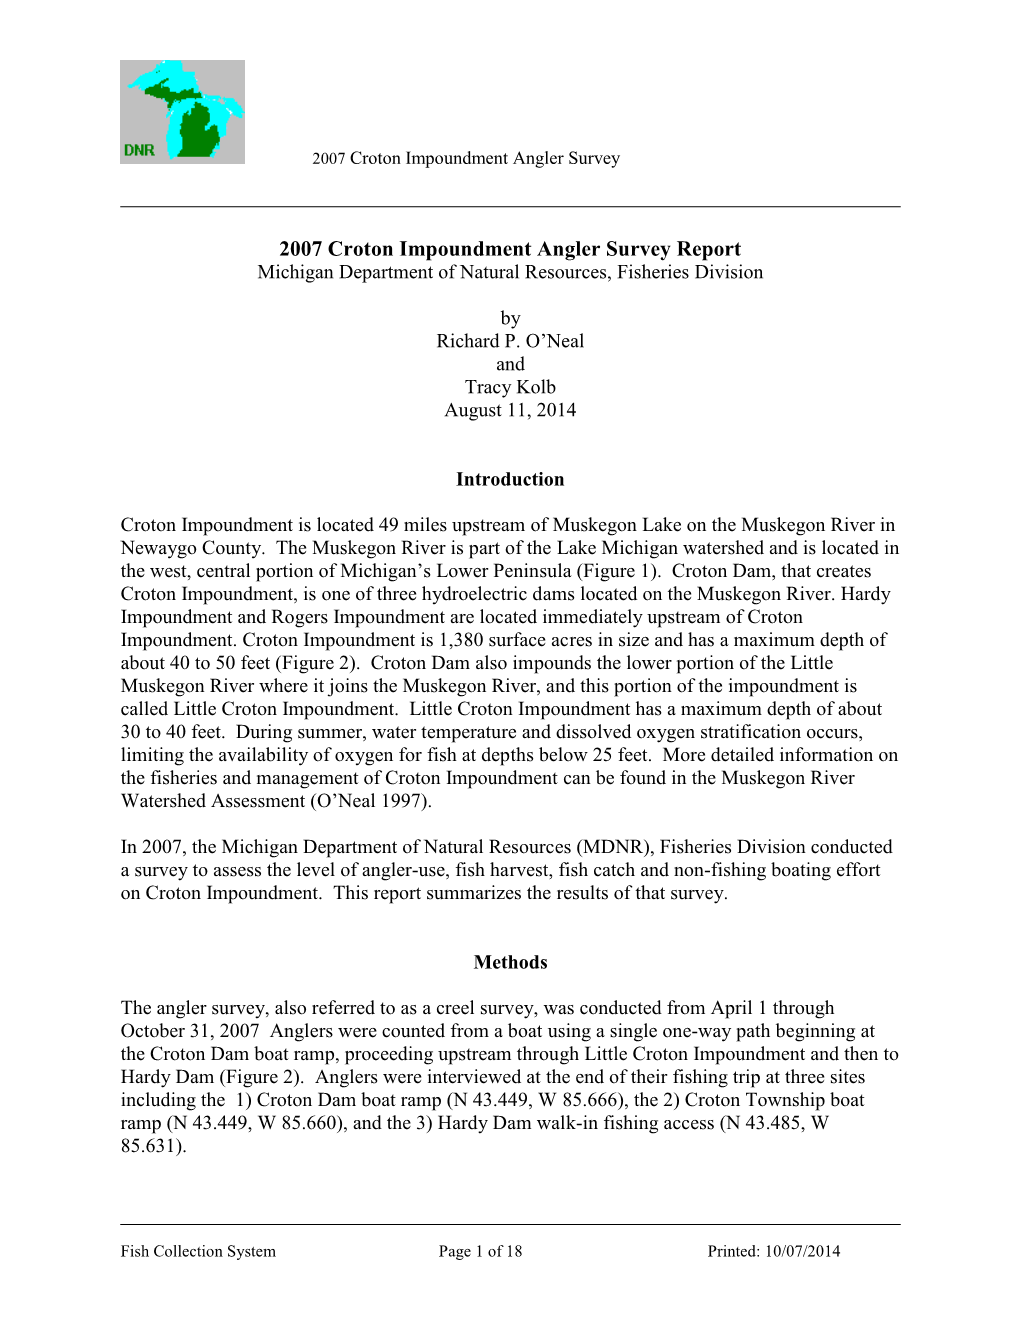 Croton Impoundment Angler Survey Report, 2007